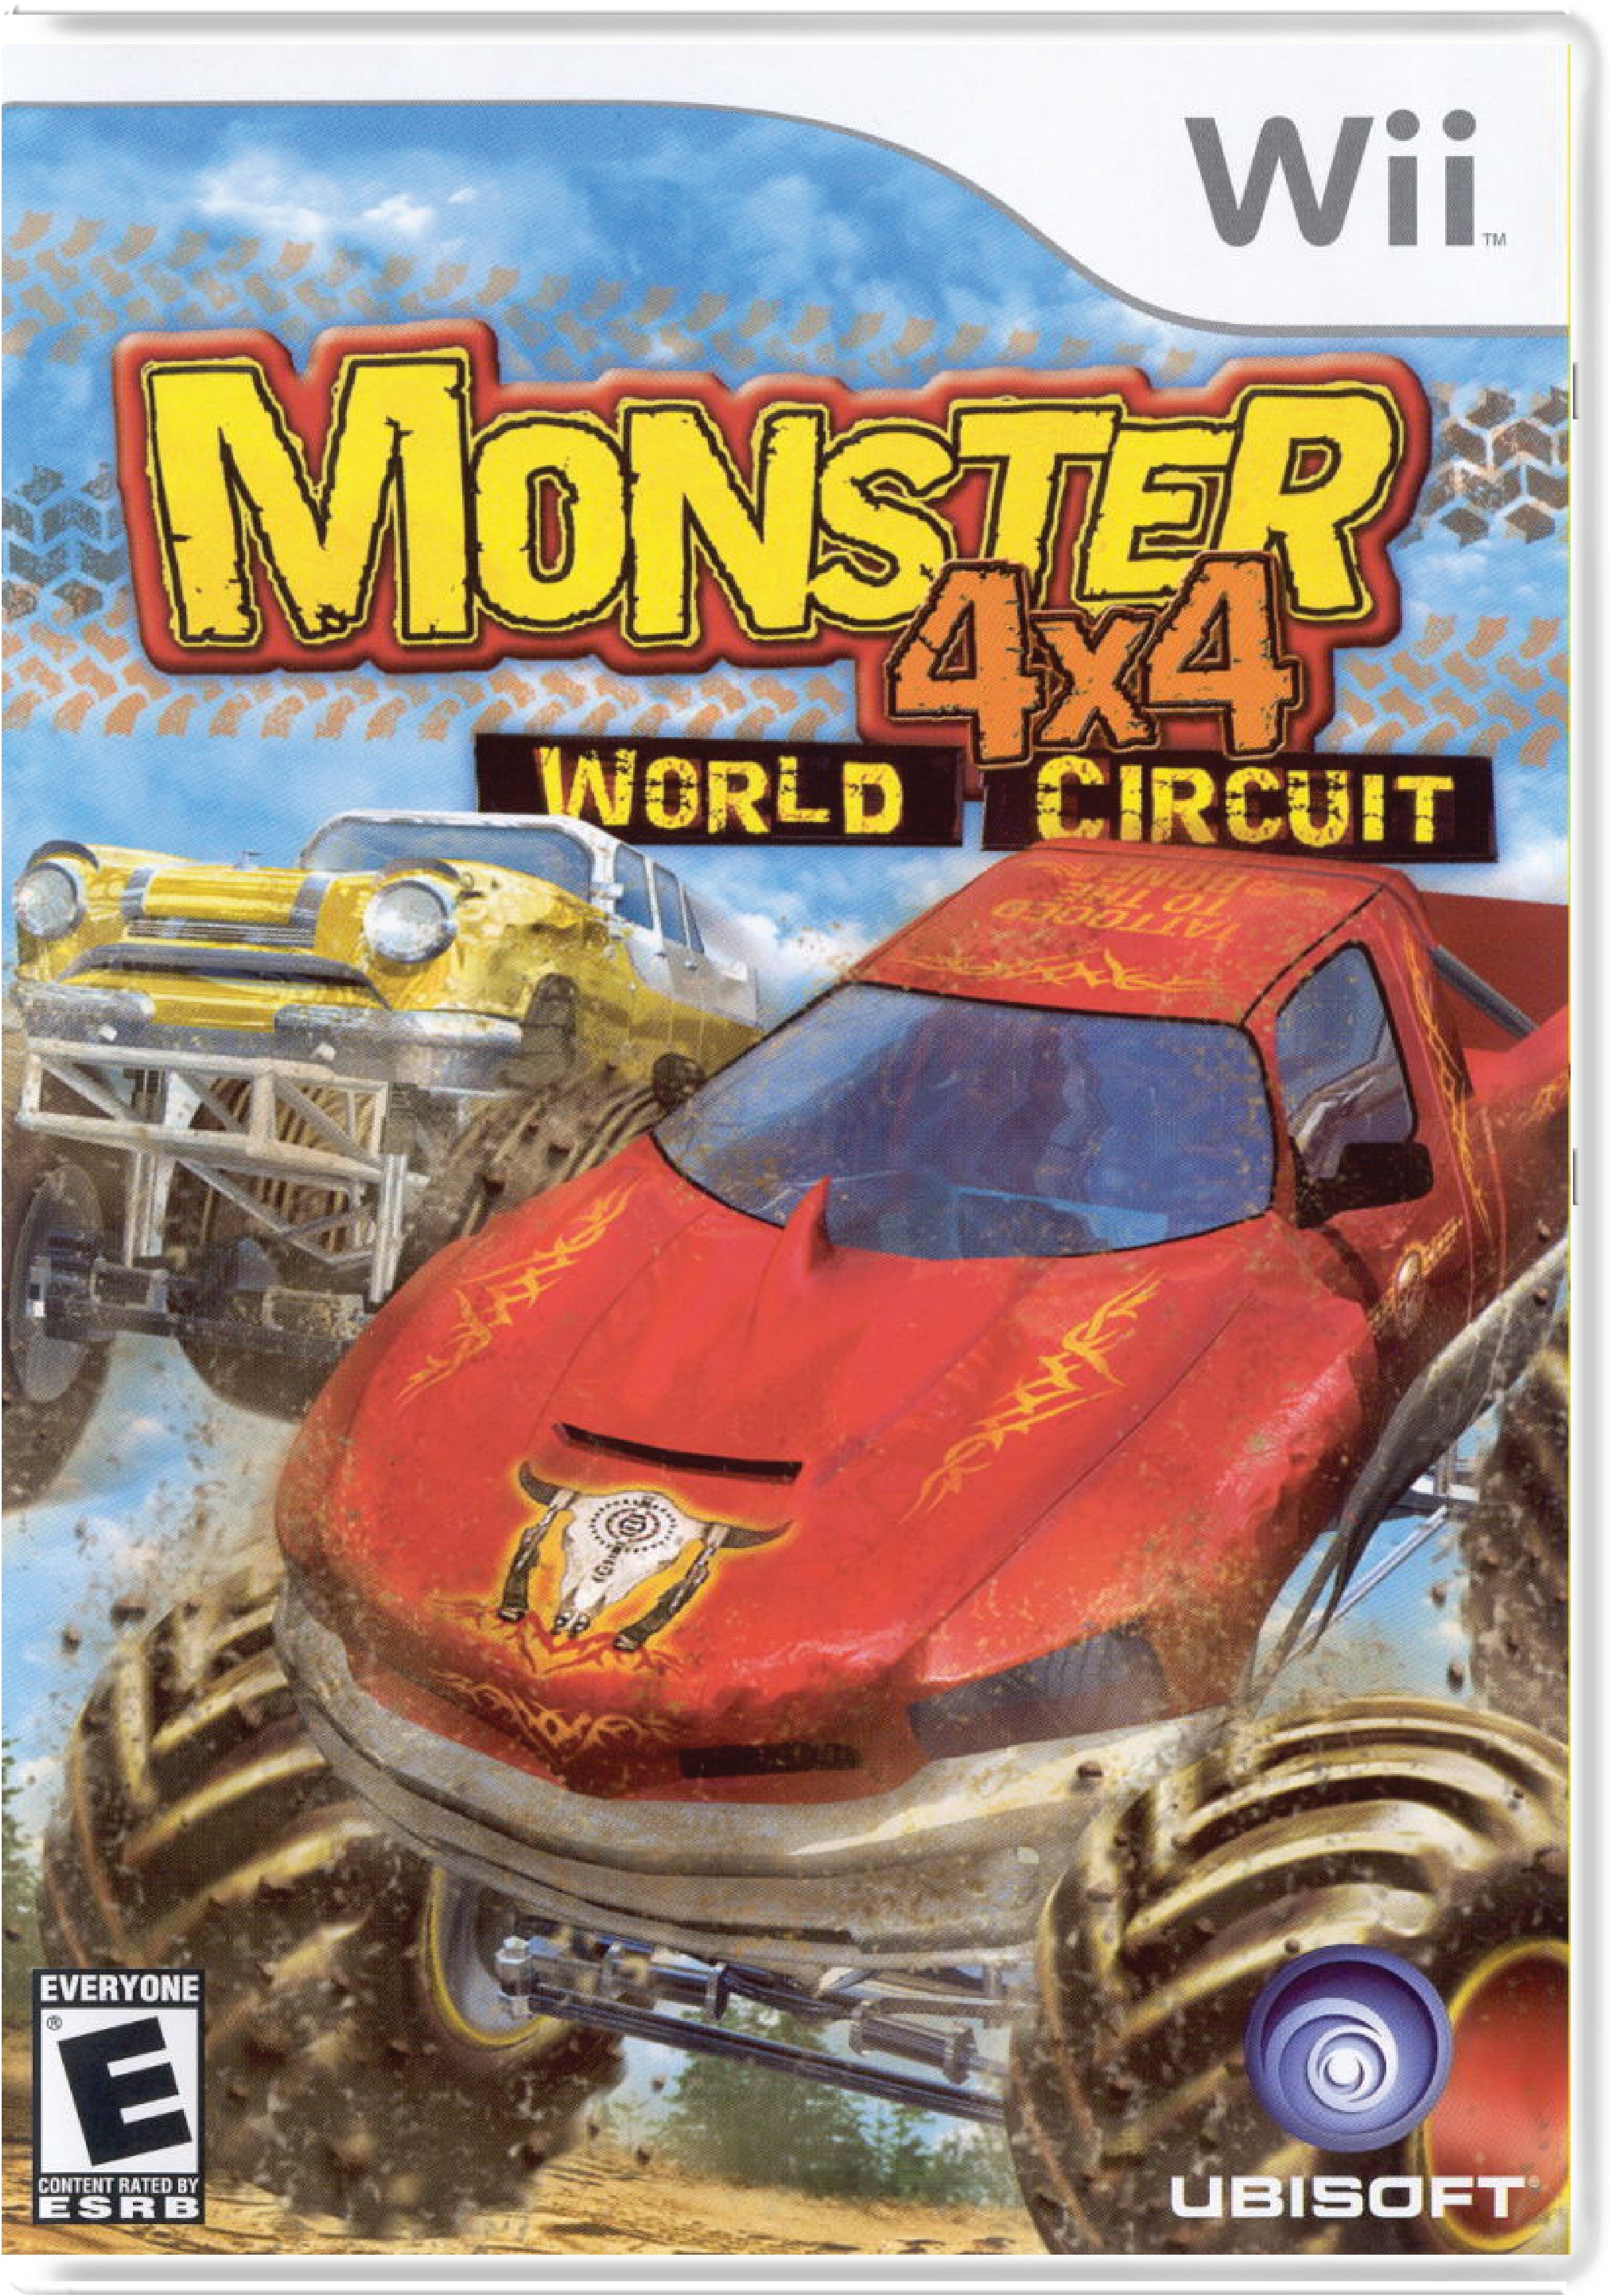 Monster 4X4 World Circuit Cover Art